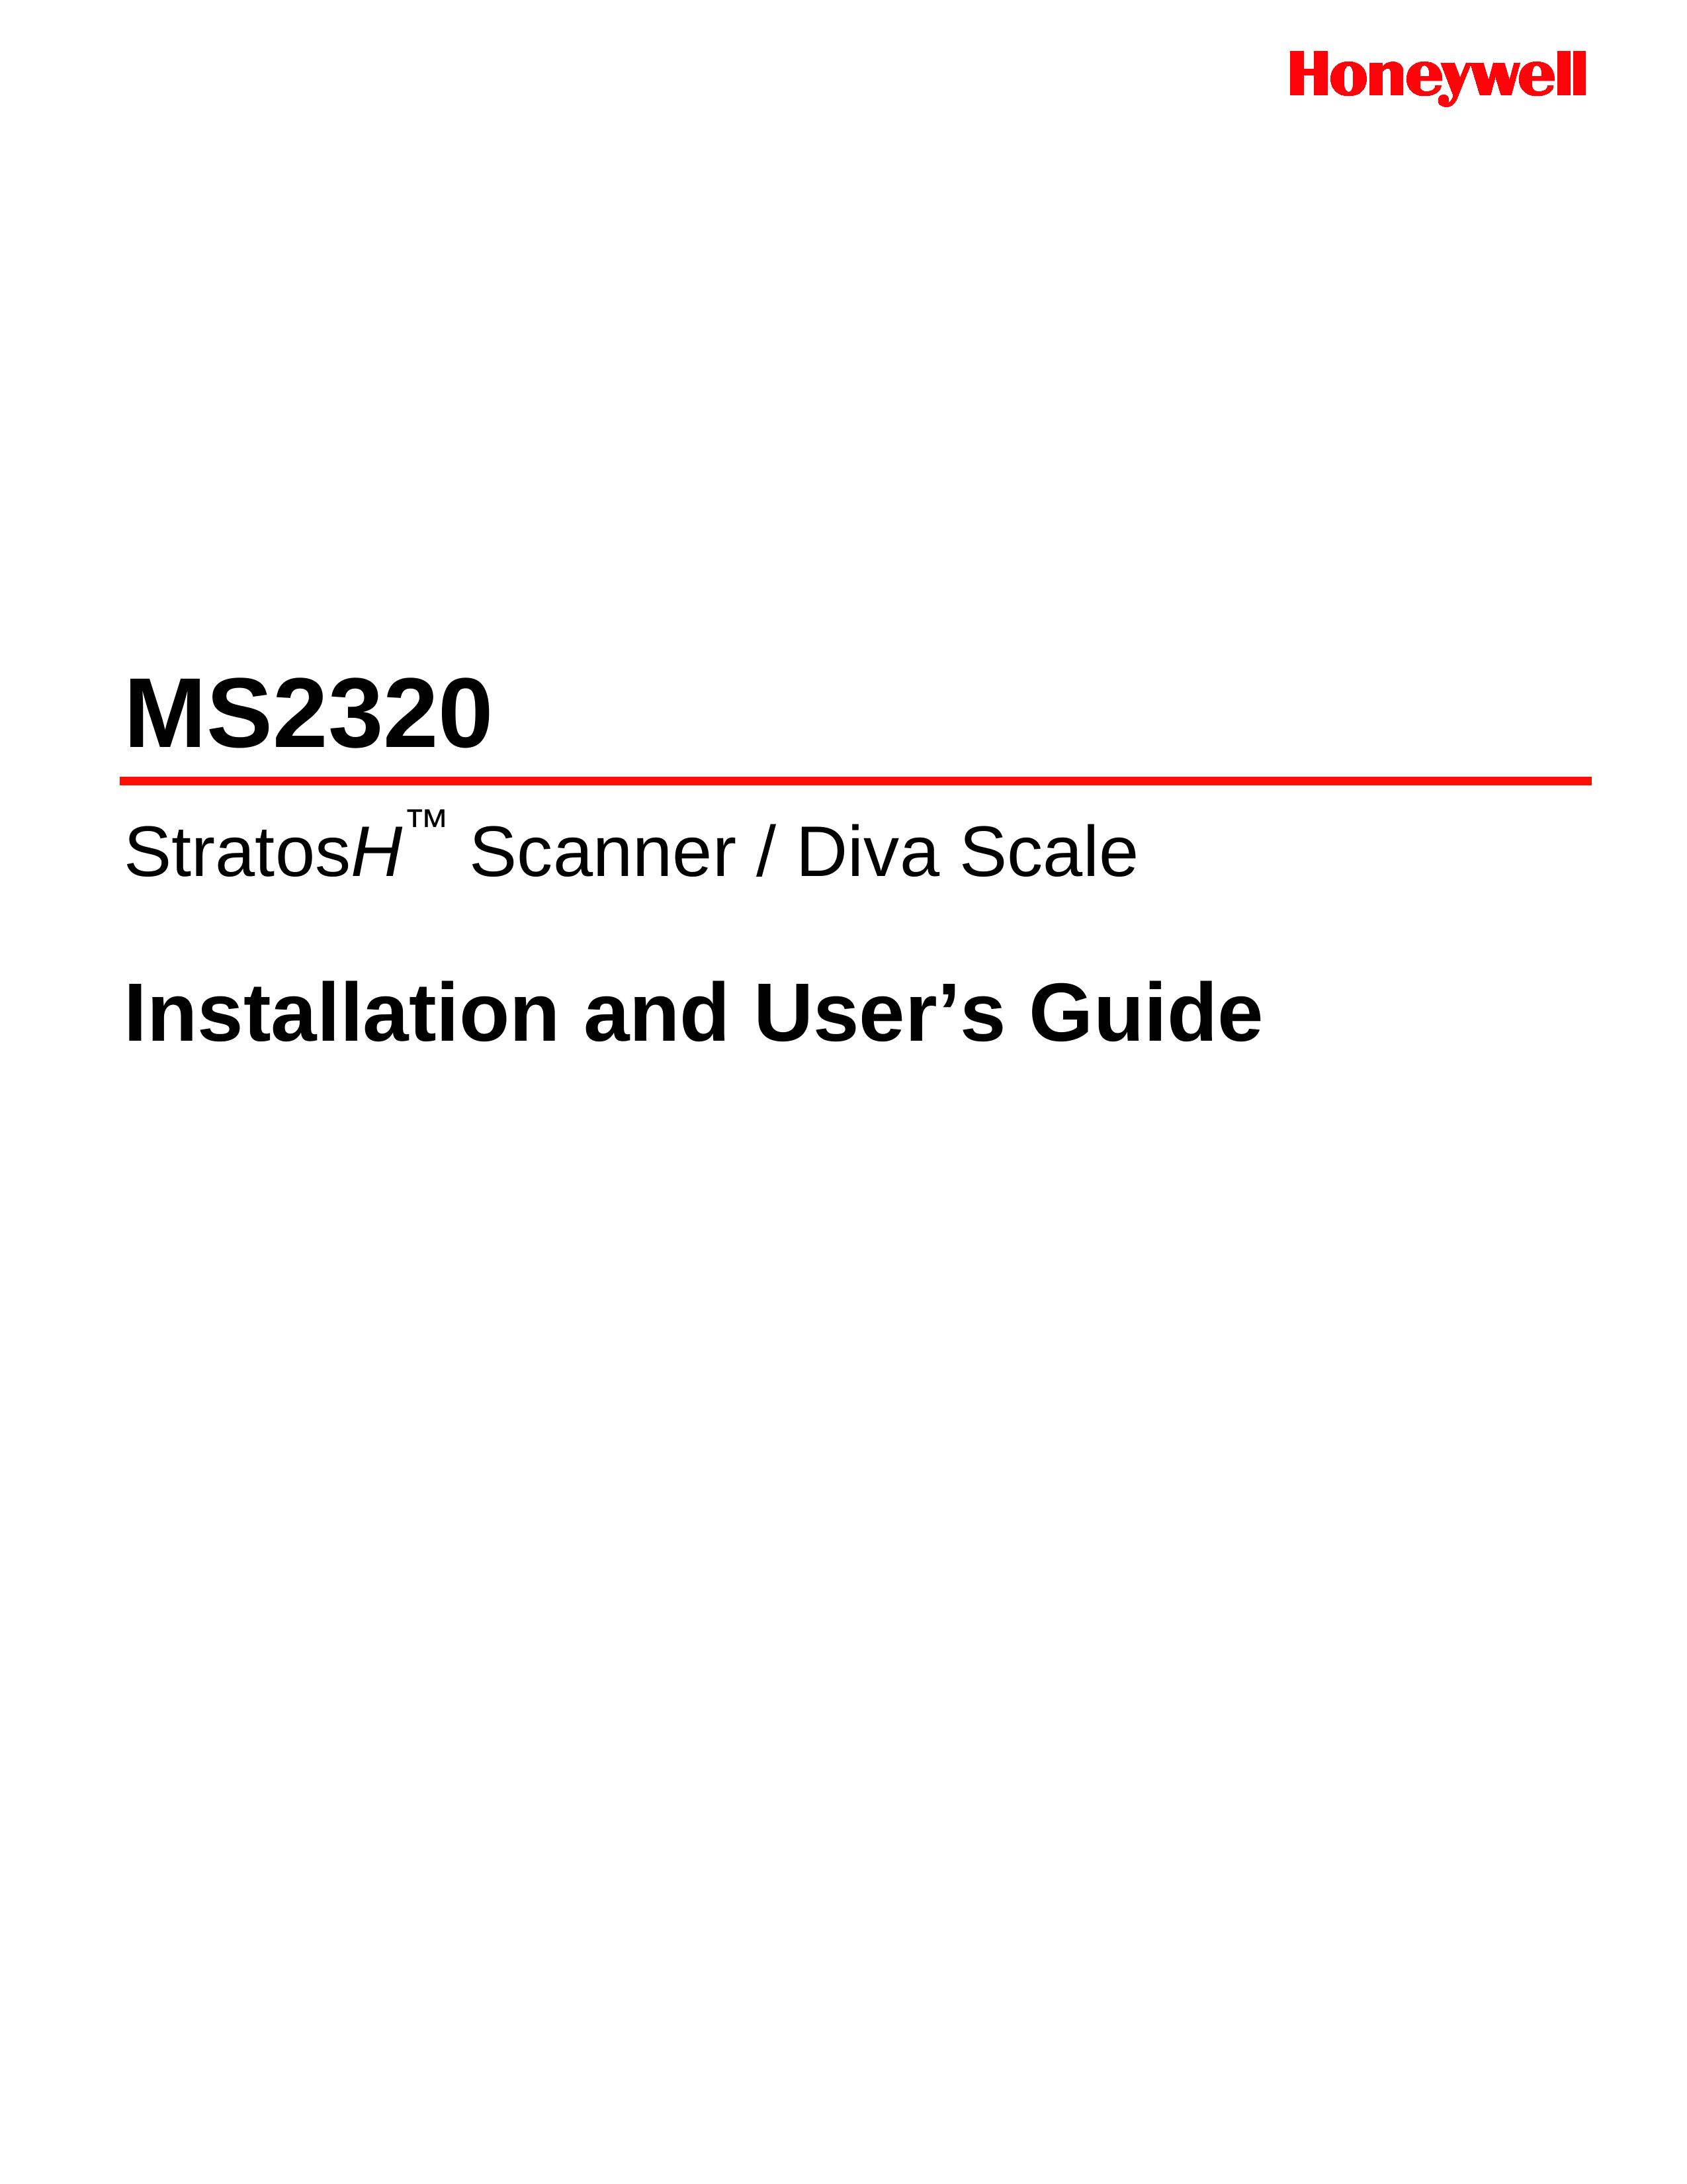 Honeywell MS2320 Photo Scanner User Manual